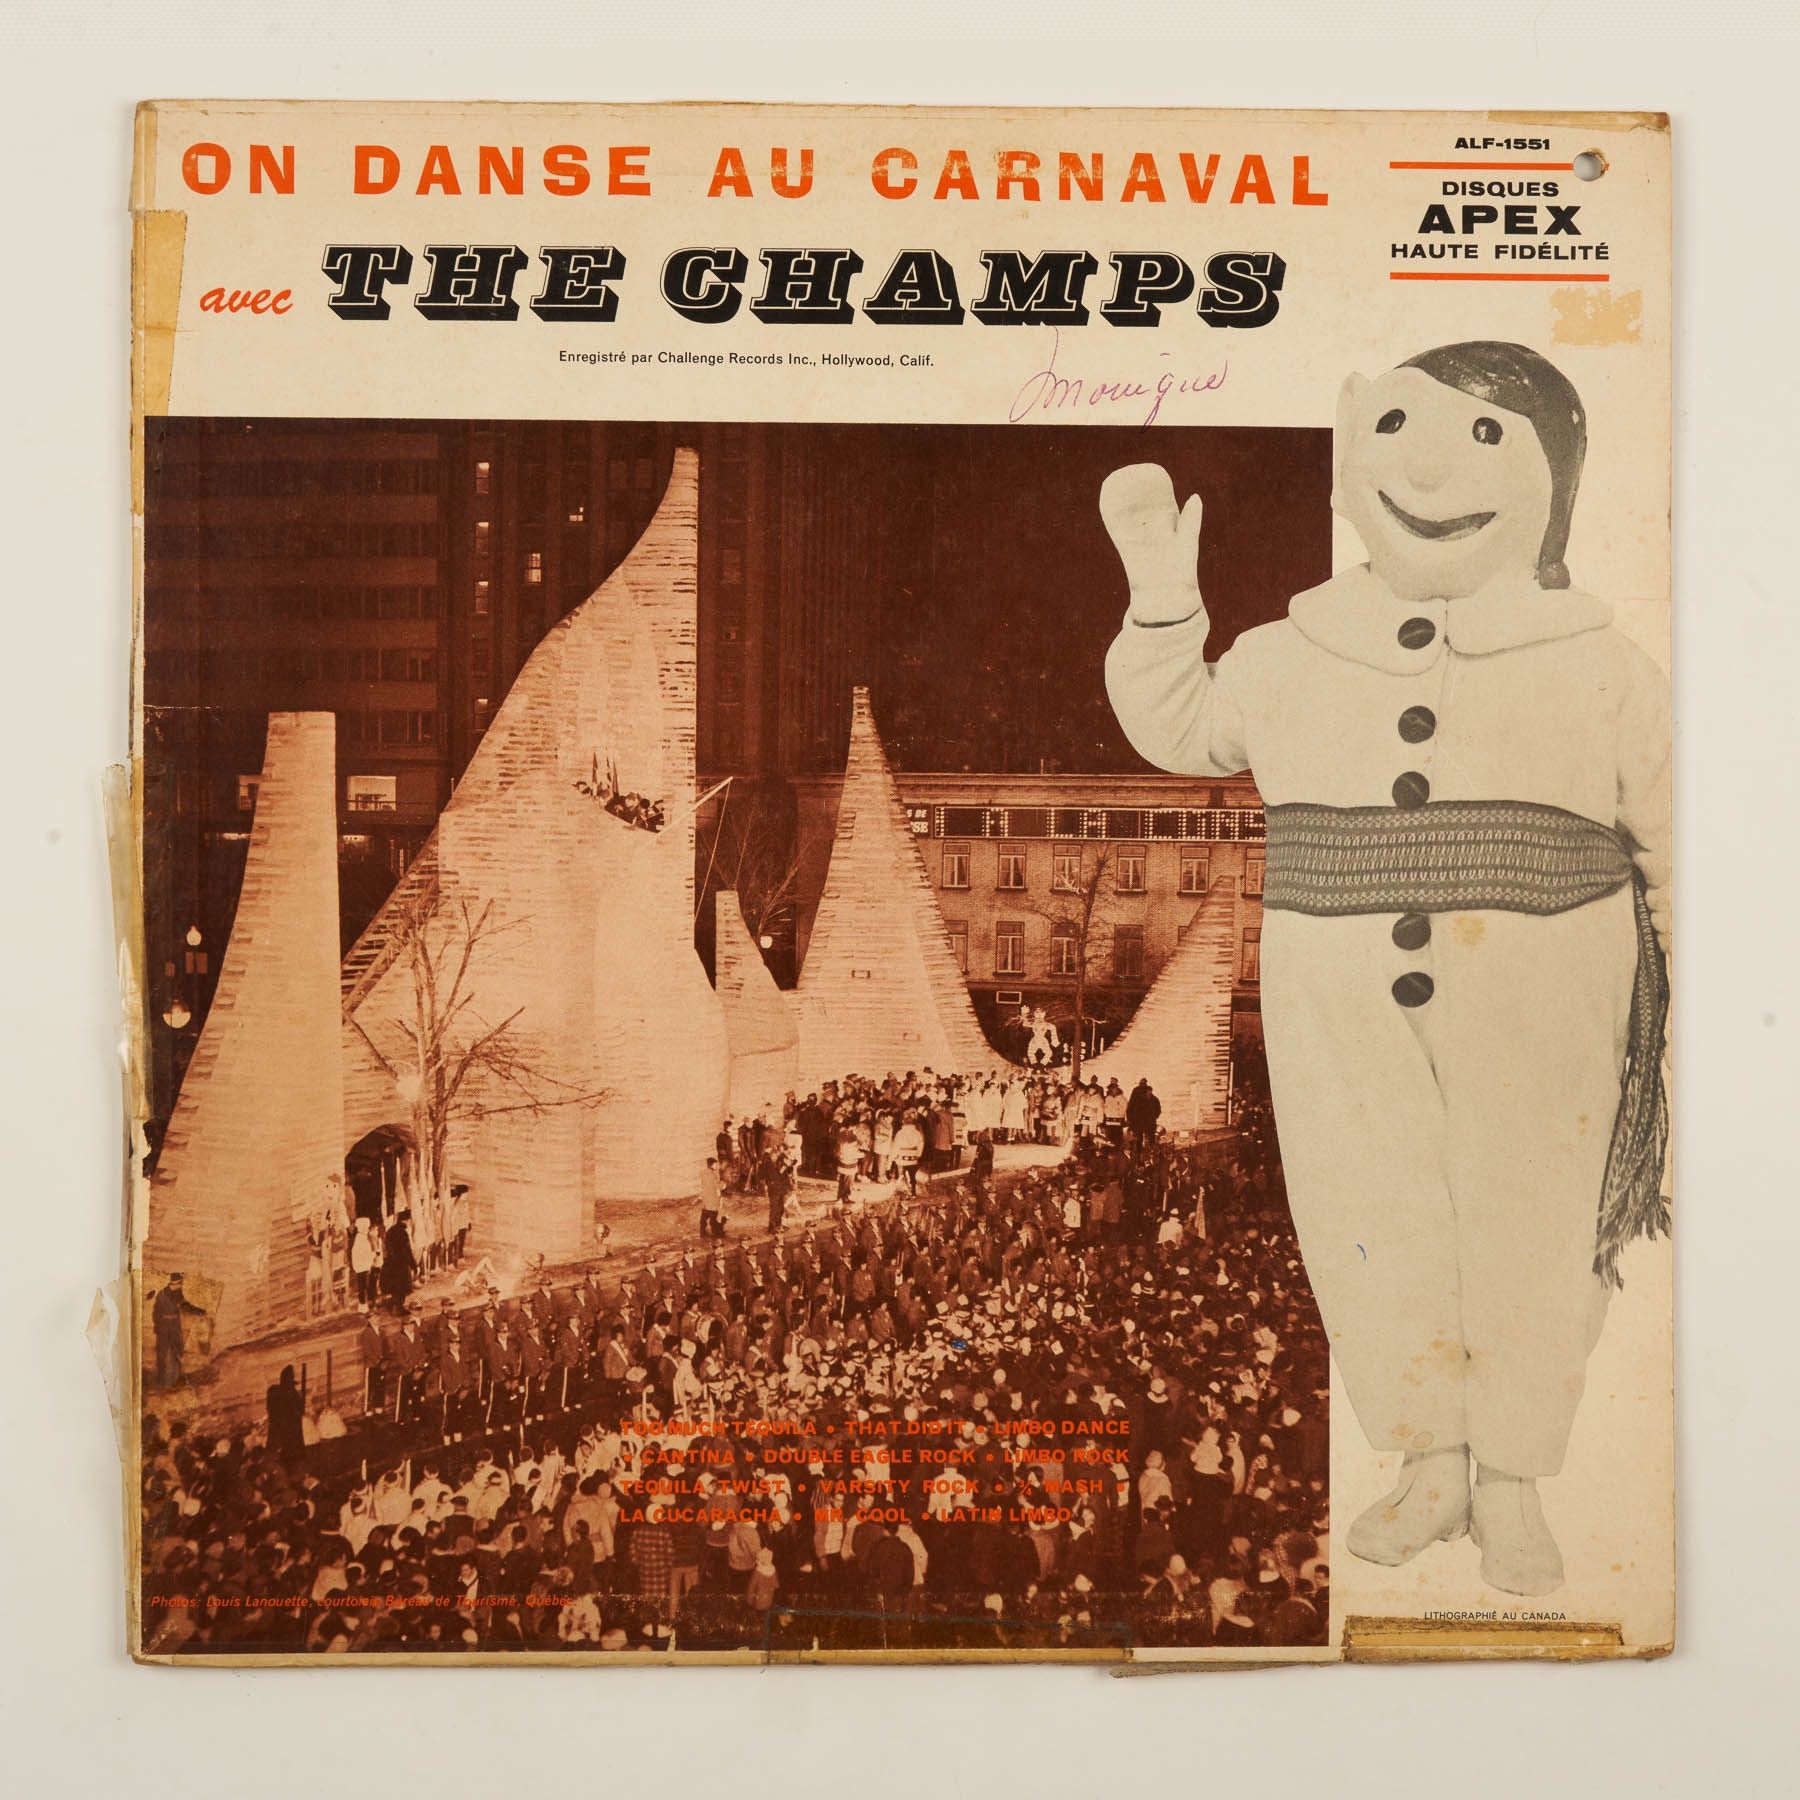 Imagem do álbum On Danse Au Carnaval do(a) artista The Champs